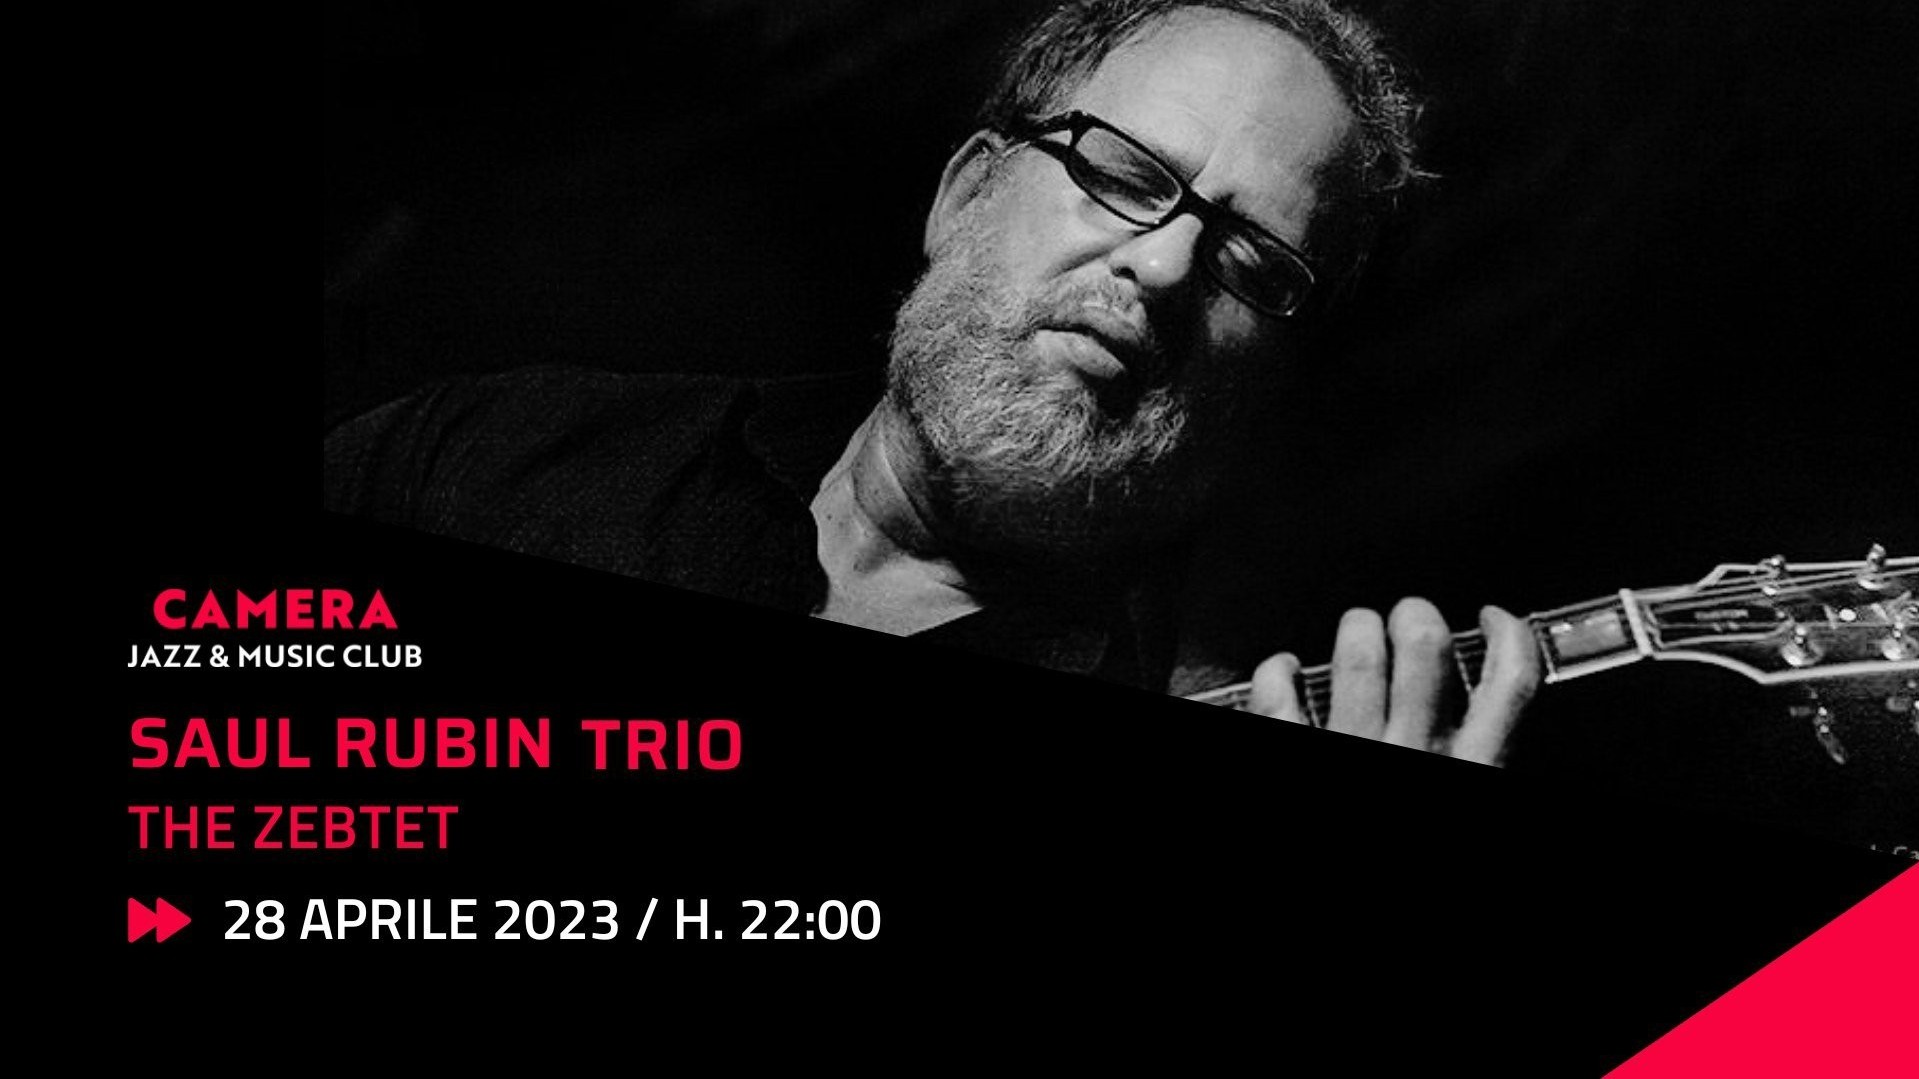 Saul Rubin Trio “The Zebtet”